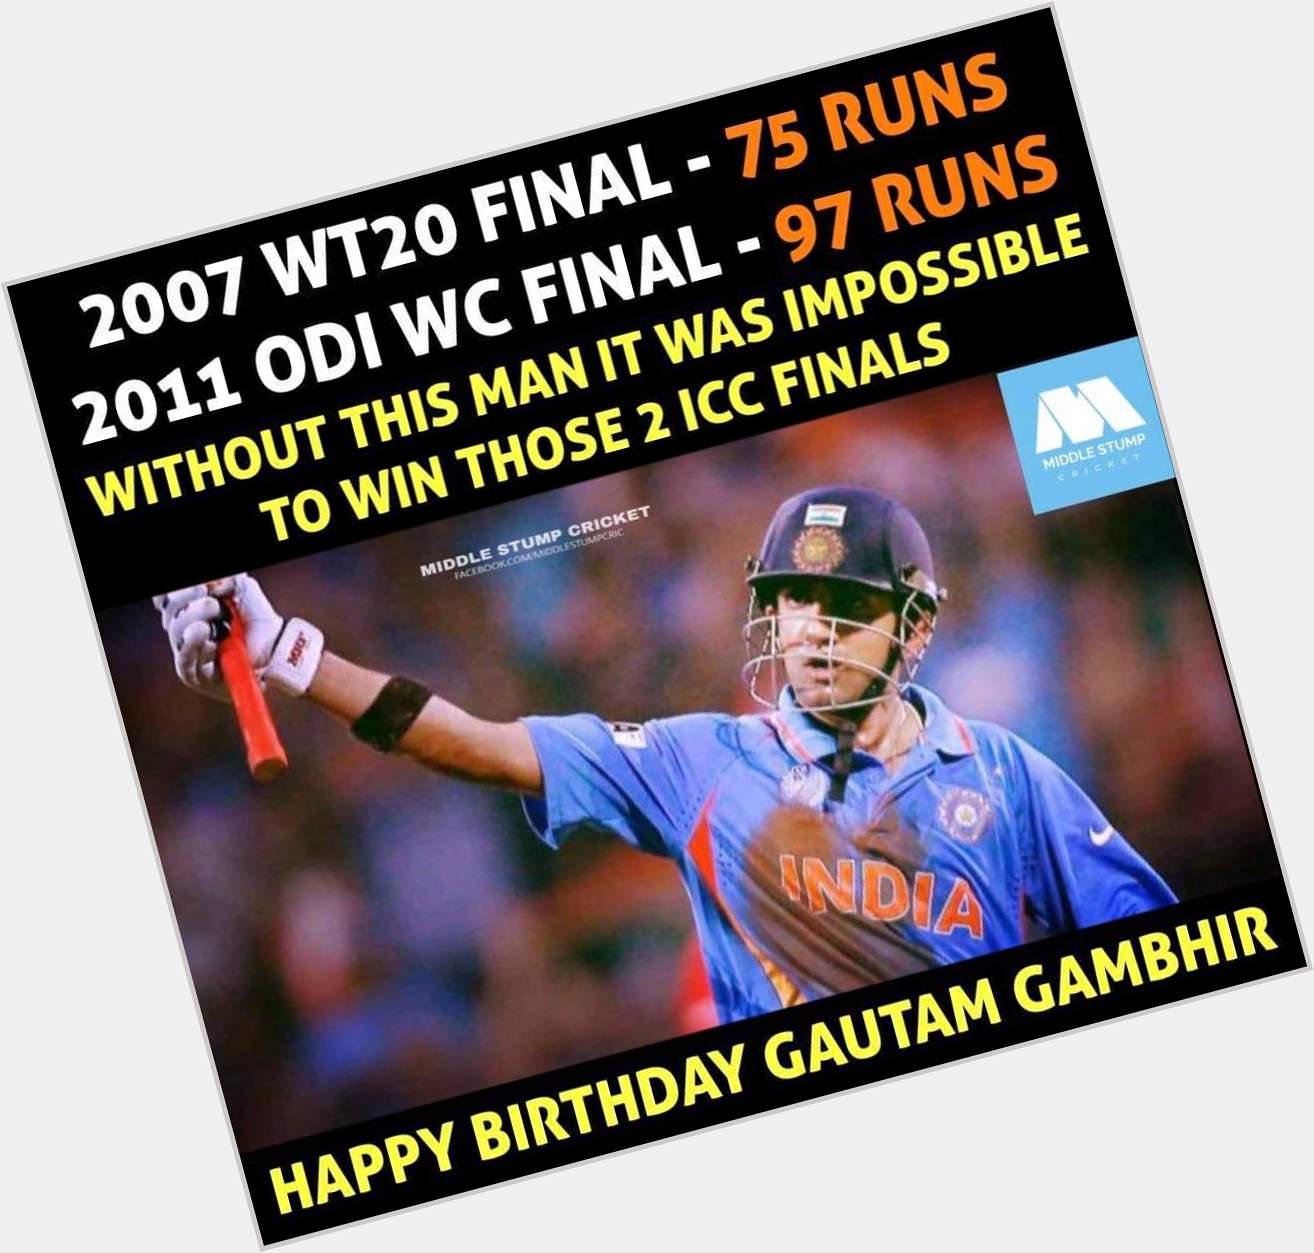  Happy Birthday Legend Gambhir 